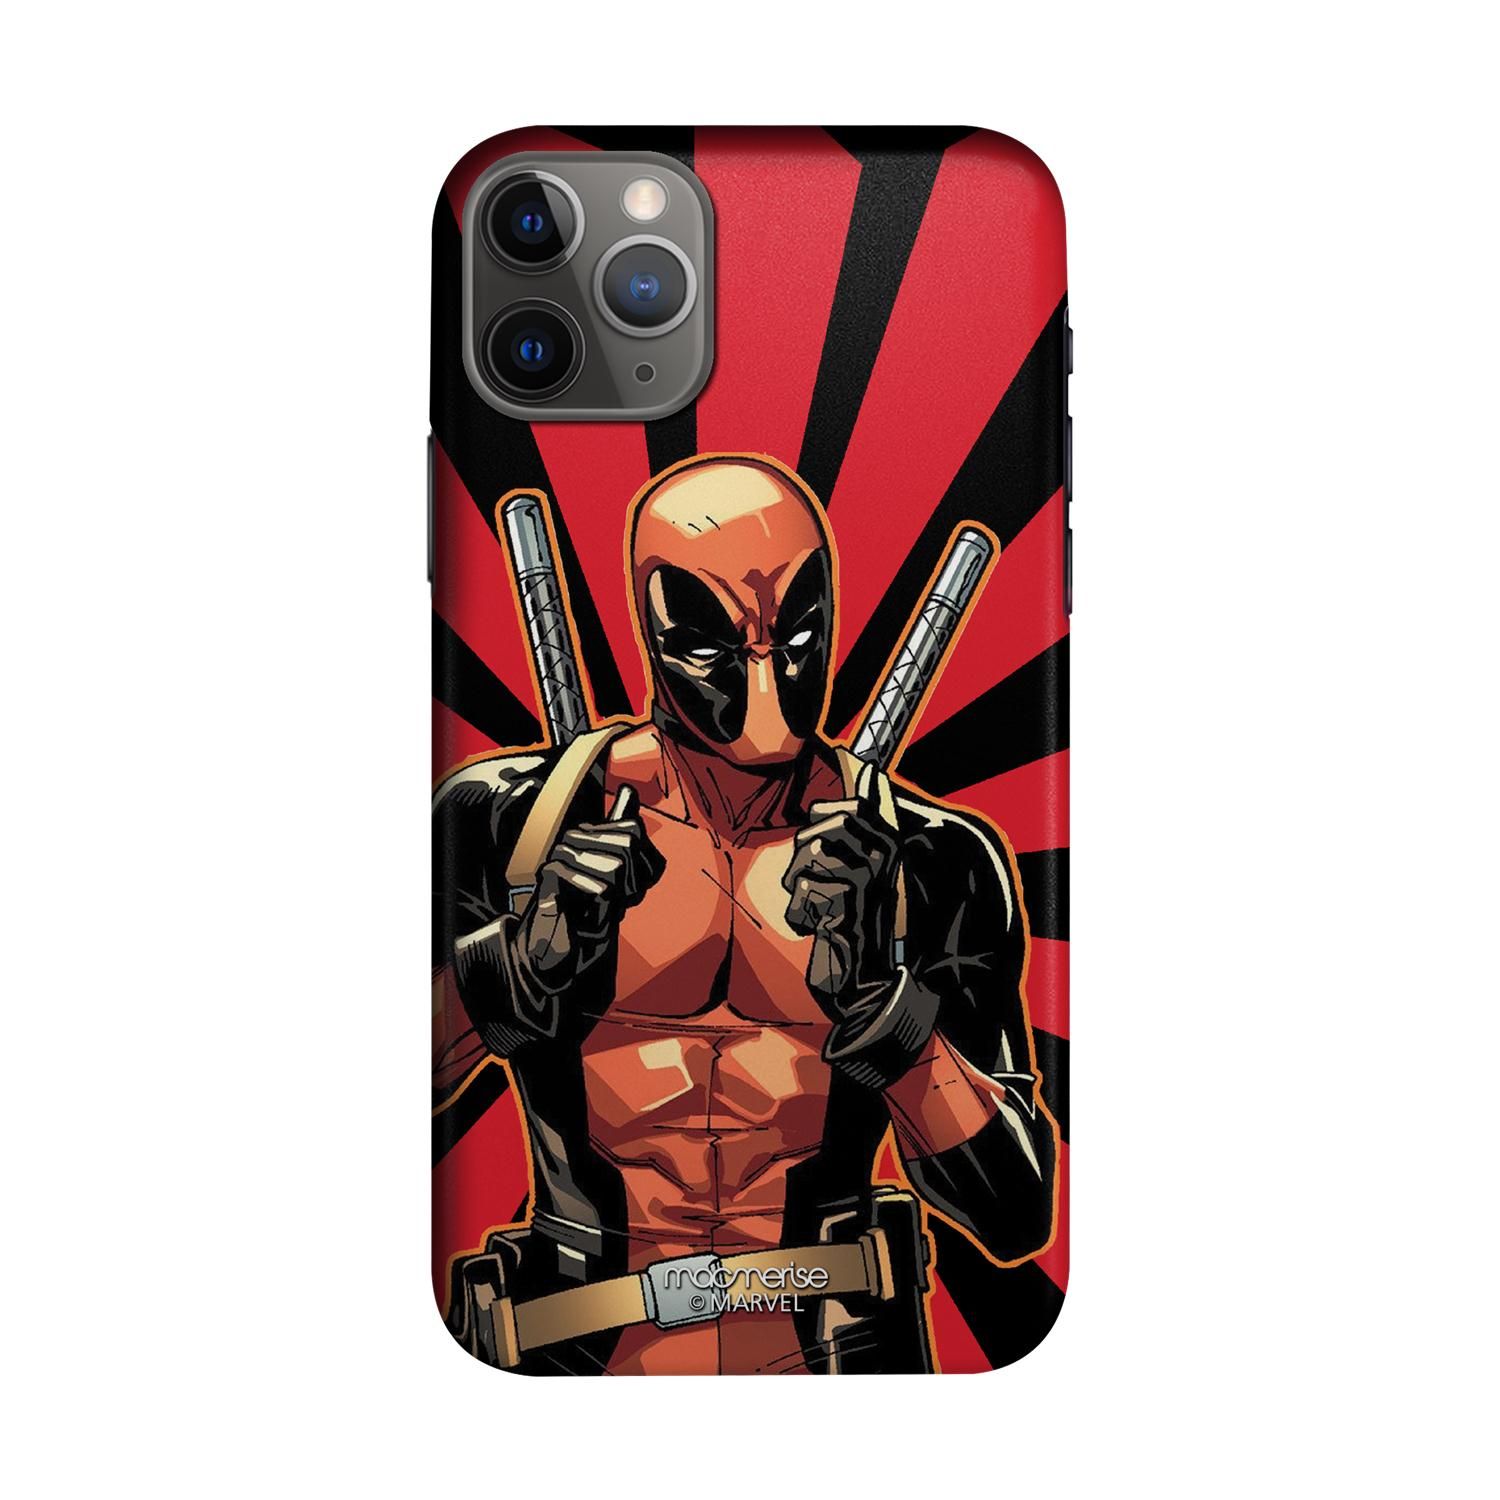 Buy Smart Ass Deadpool - Sleek Phone Case for iPhone 11 Pro Max Online